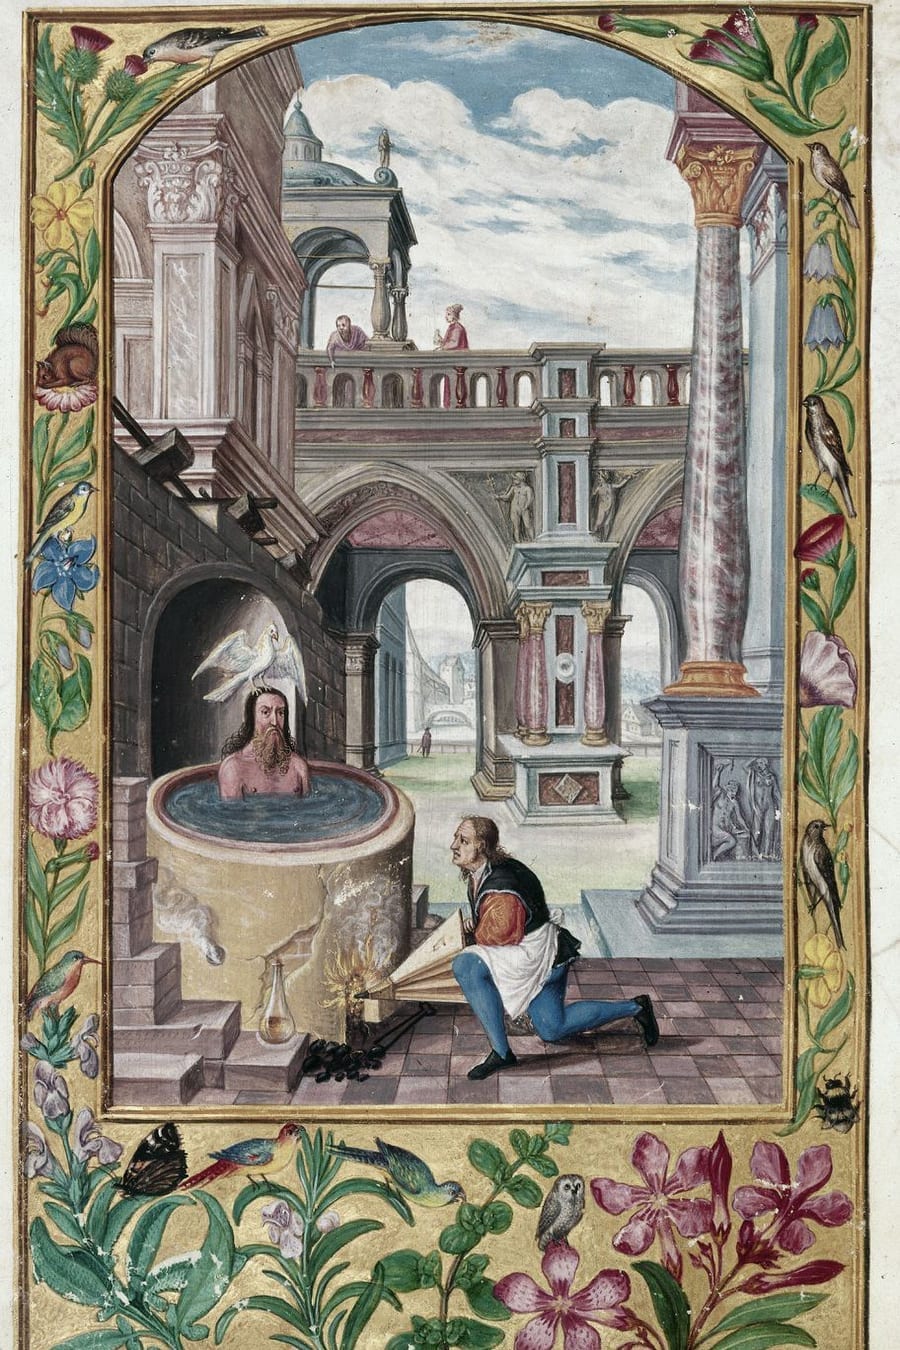 Illustration of a man bathing from the Alchemical manuscript Splendor Solis